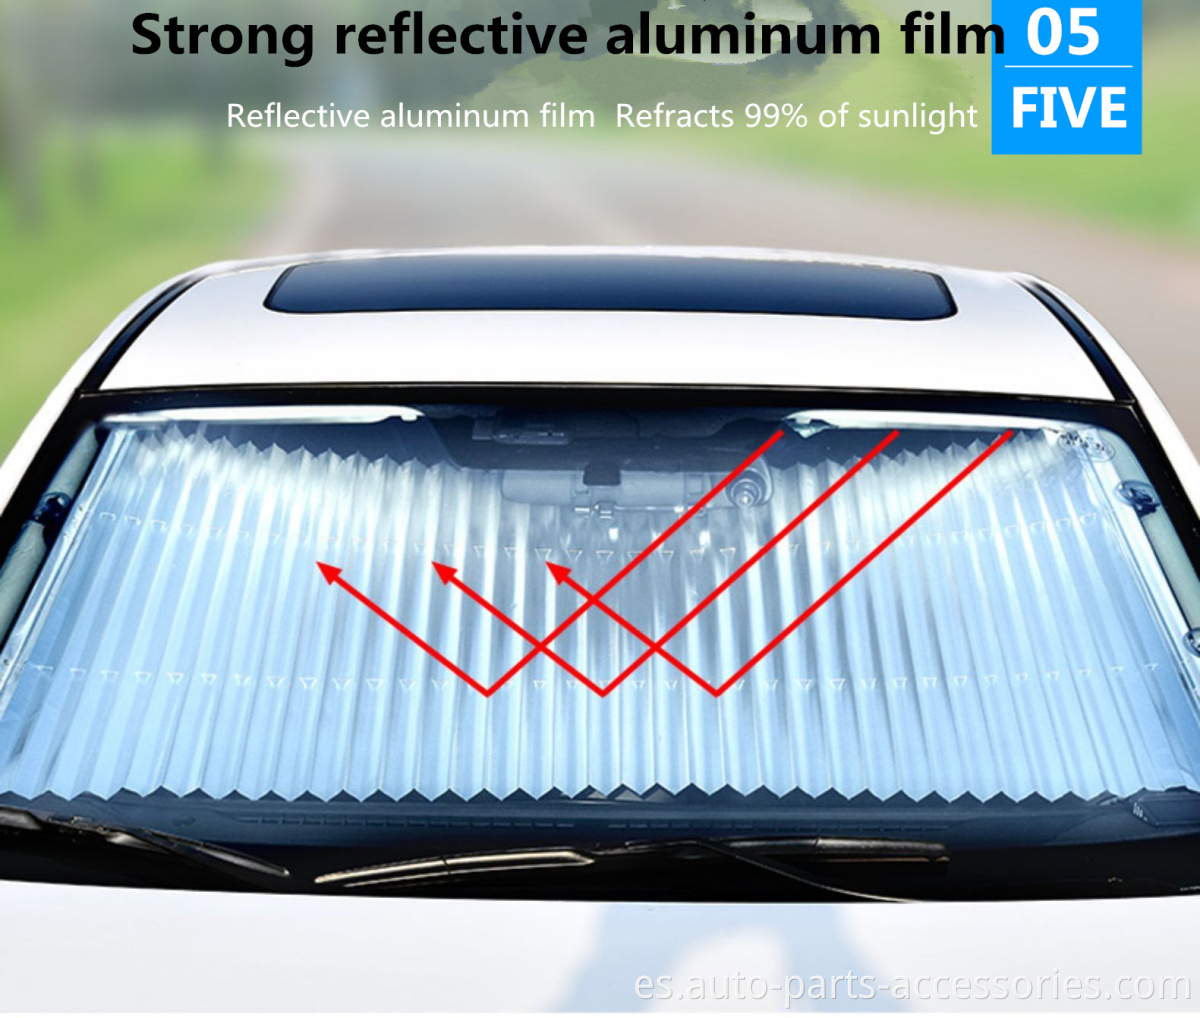 2020 Rayos UV personalizados Protección Aislamiento de calor Sunshade Sun Visor Sombreado para automóvil